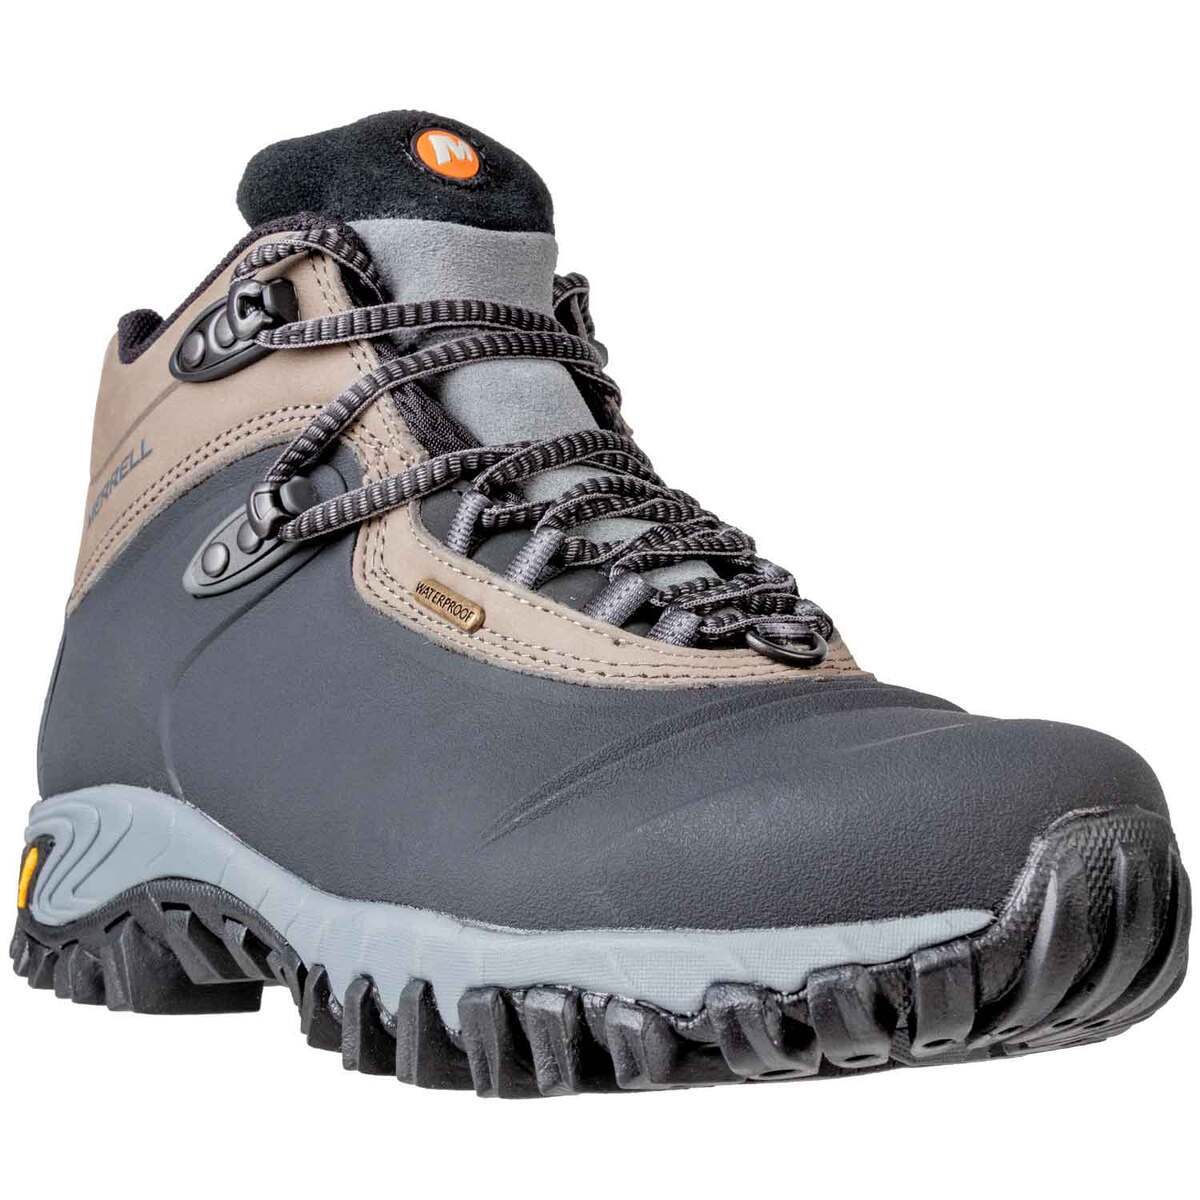 https://www.sportsmans.com/medias/merrell-mens-thermo-6-waterproof-mid-hiking-boots-black-size-9-1233277-1.jpg?context=bWFzdGVyfGltYWdlc3wxMTkyNjZ8aW1hZ2UvanBlZ3xhREpsTDJoalpDOHhNVFkxT0RnNE1qRTROekk1TkM4eE1qQXdMV052Ym5abGNuTnBiMjVHYjNKdFlYUmZZbUZ6WlMxamIyNTJaWEp6YVc5dVJtOXliV0YwWDNOdGR5MHhNak16TWpjM0xURXVhbkJufDYxYzI5MmUyNmQ1ZDNjMmQ1MjVmMTQ0Mjc3YjE0N2MxYzA3MDYyN2E2OGQ0Y2E2MjliMWVhN2Y1NmFhMDY2NGQ